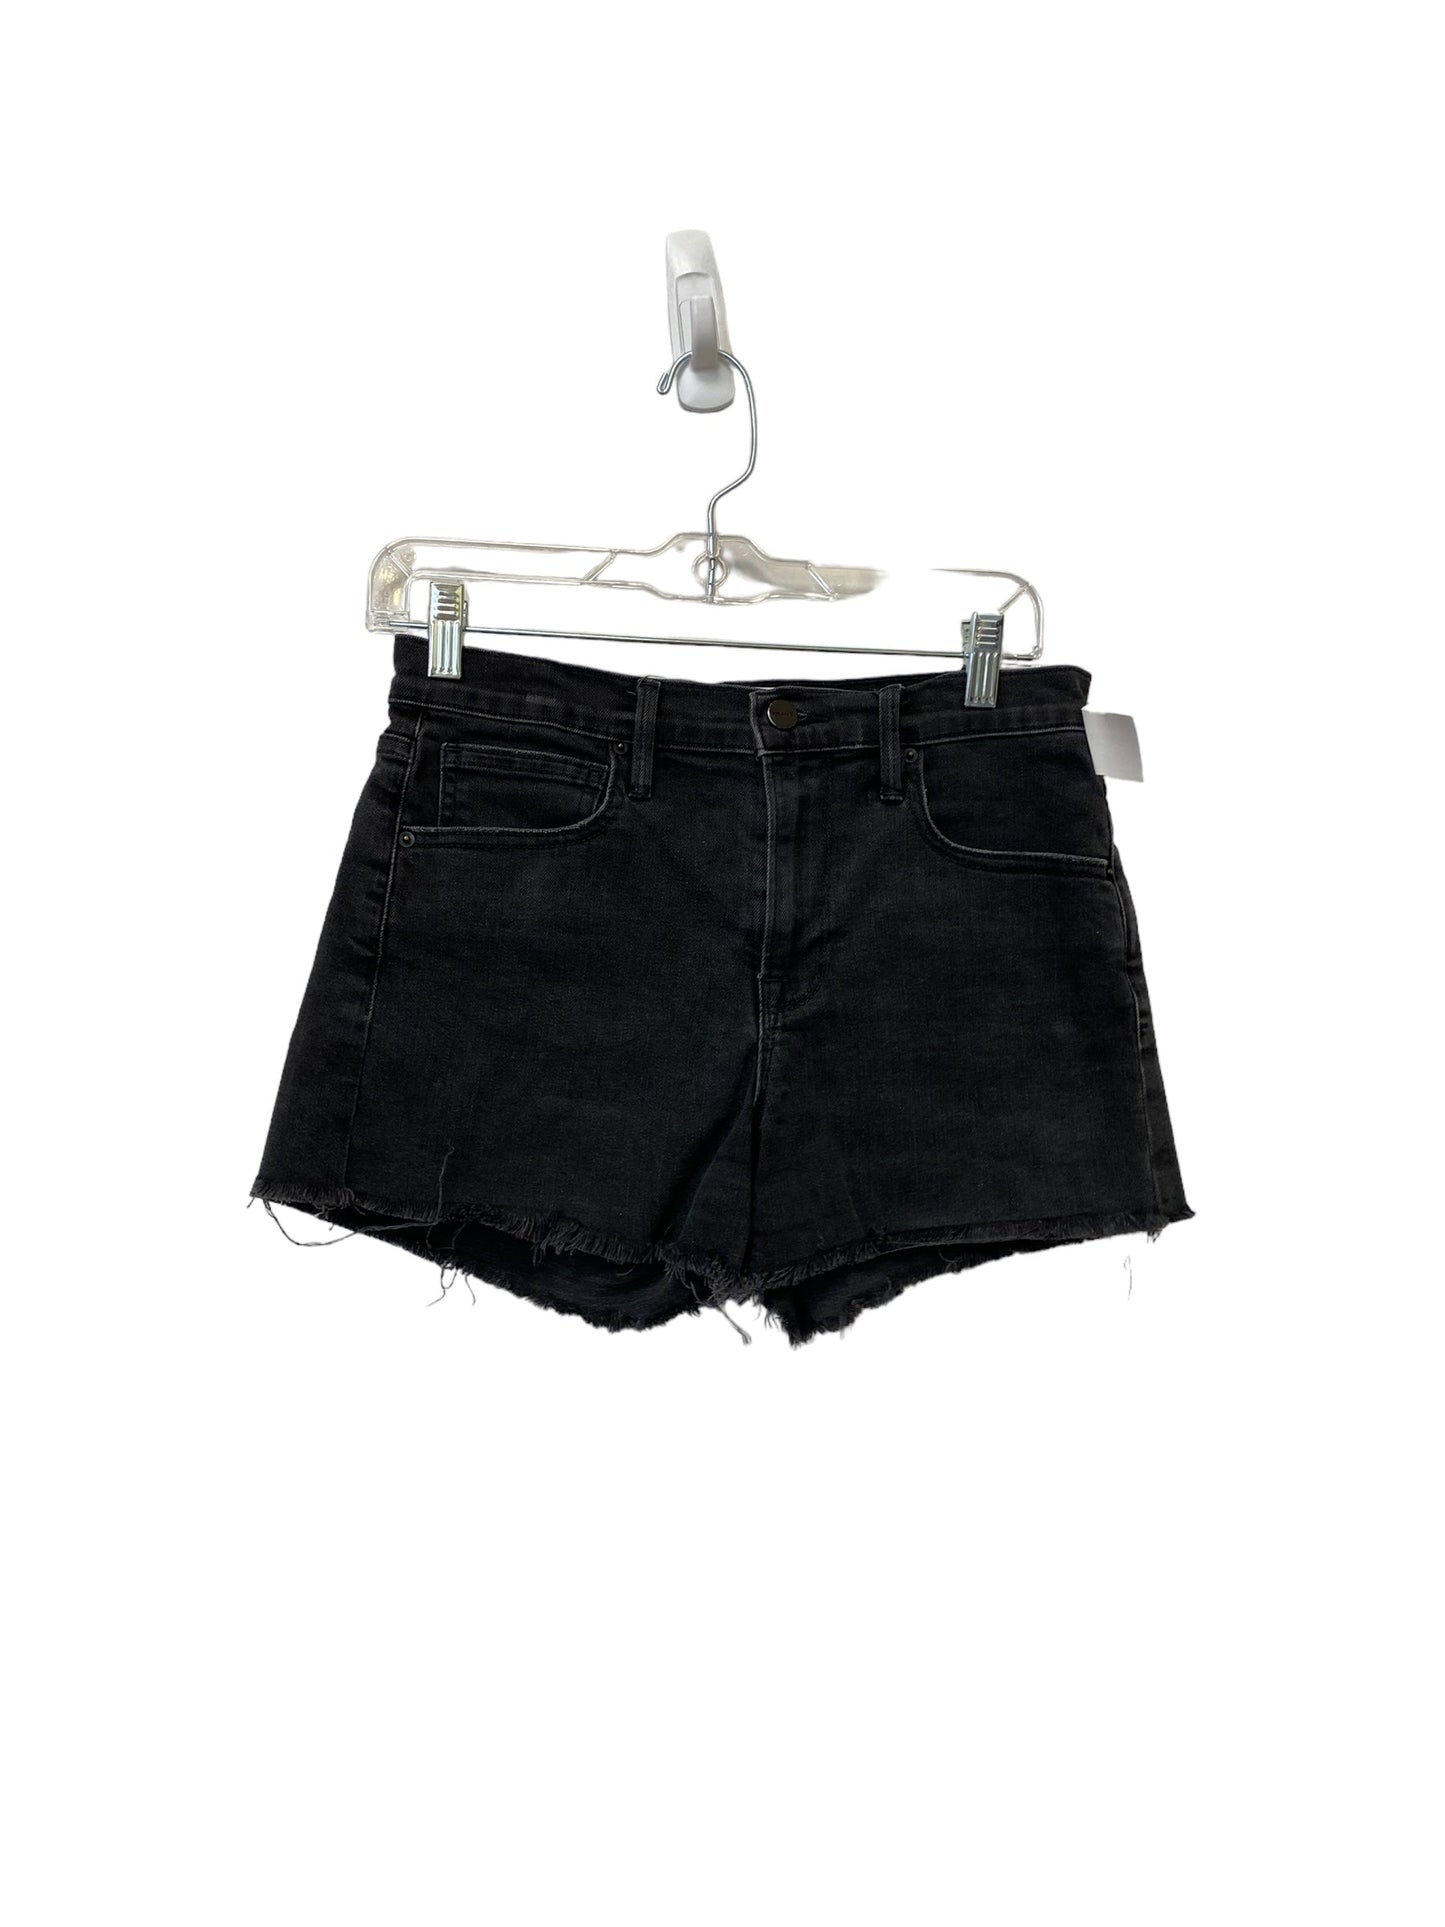 Black Shorts Frame, Size 26